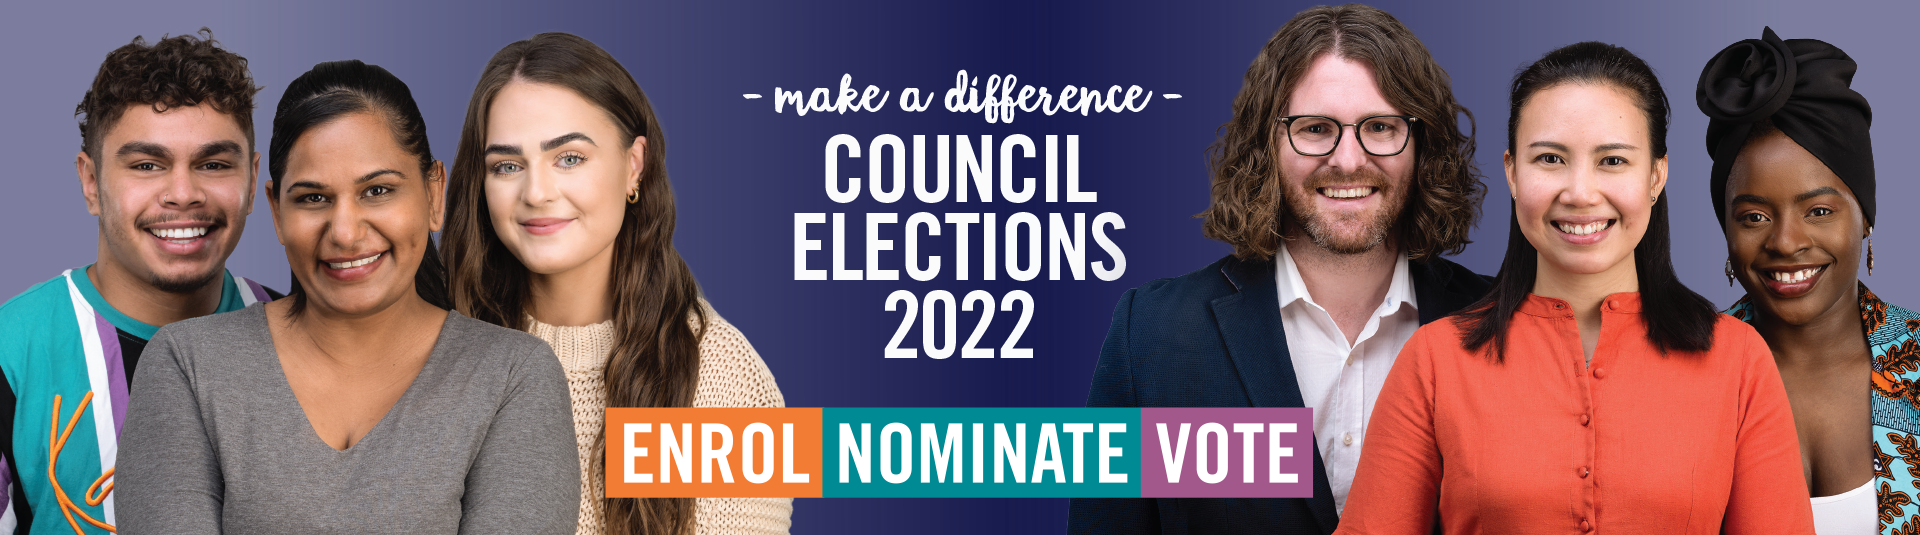 2022 Council Elections - Enrol, Nominate, Vote 